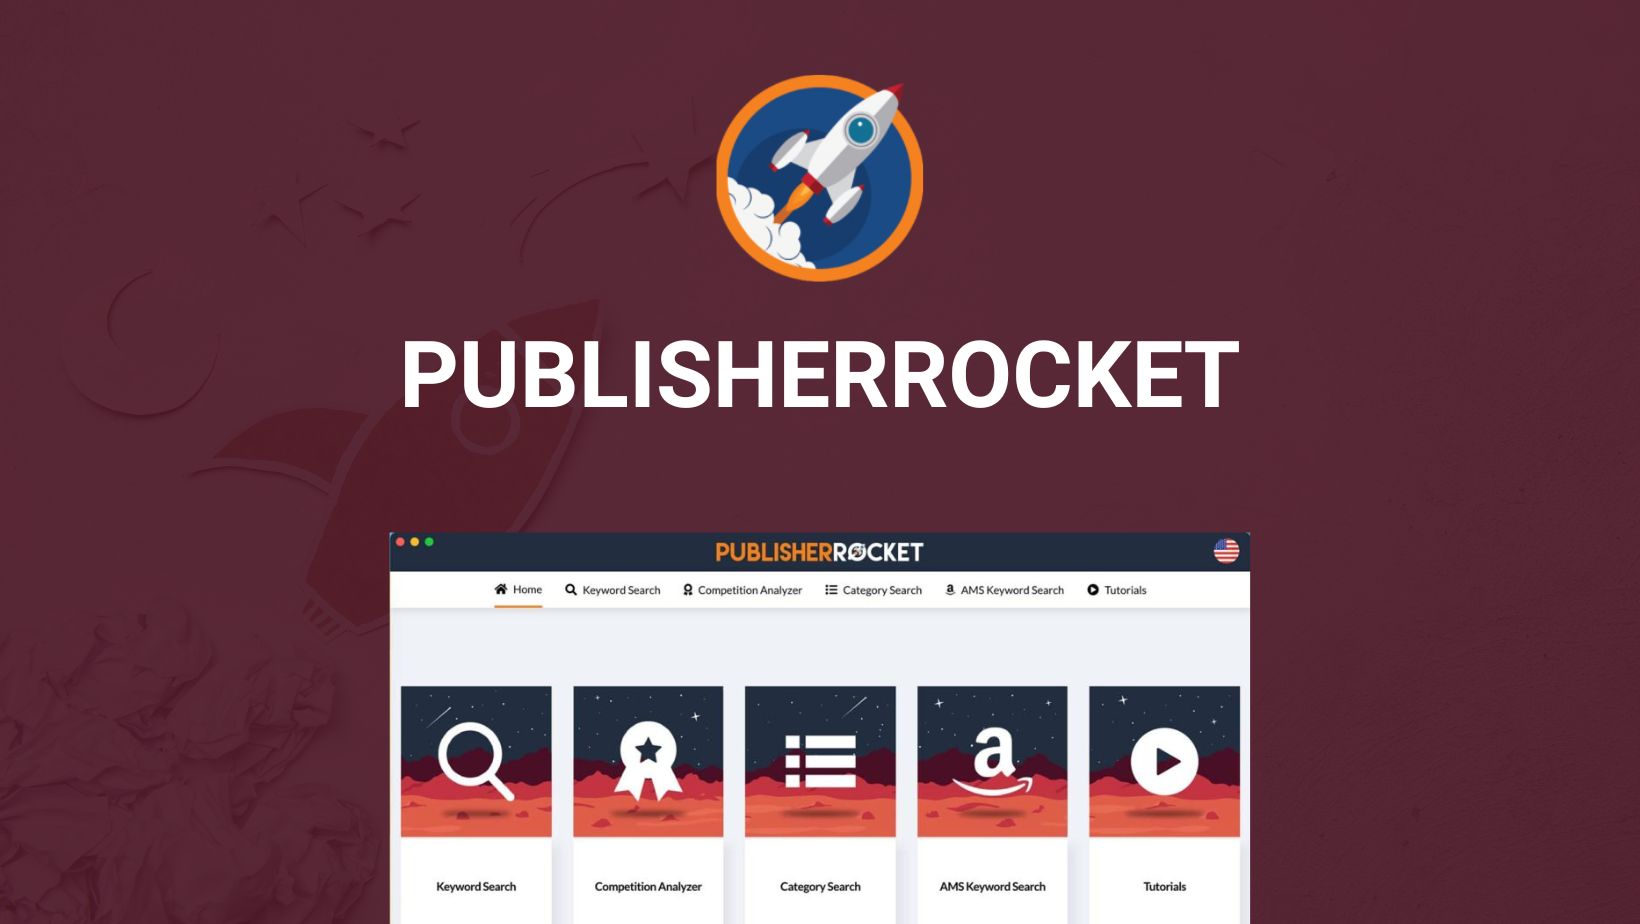 Publisher Rocket